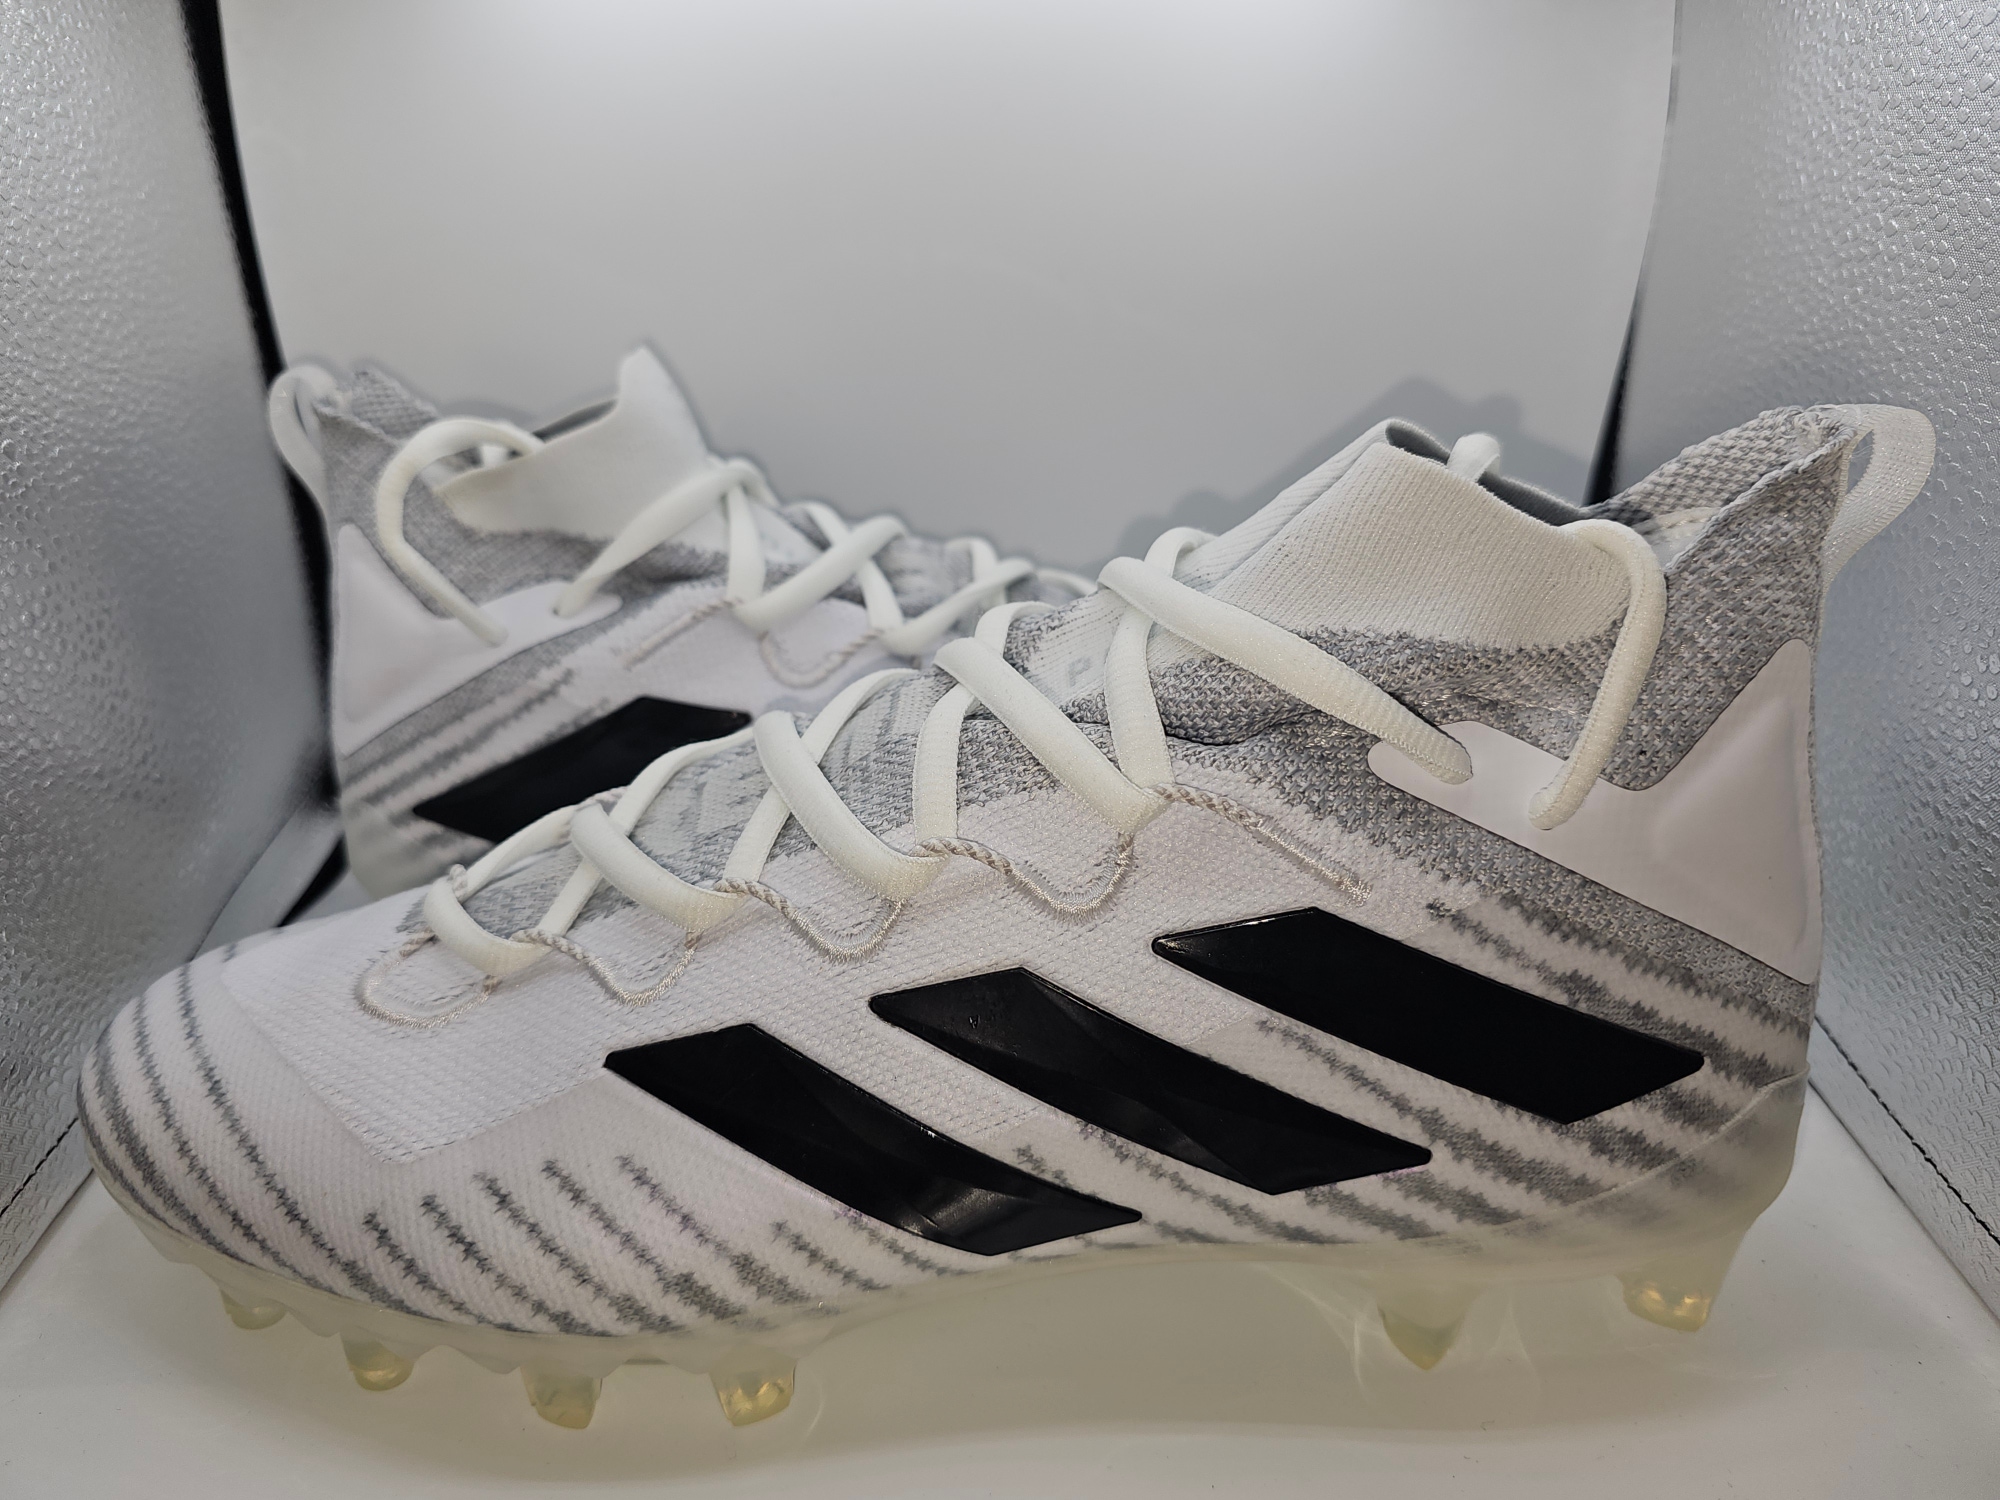 Adidas Freak 21 Ultra Primeknit 'White Black' Football Cleats Men's Size 11